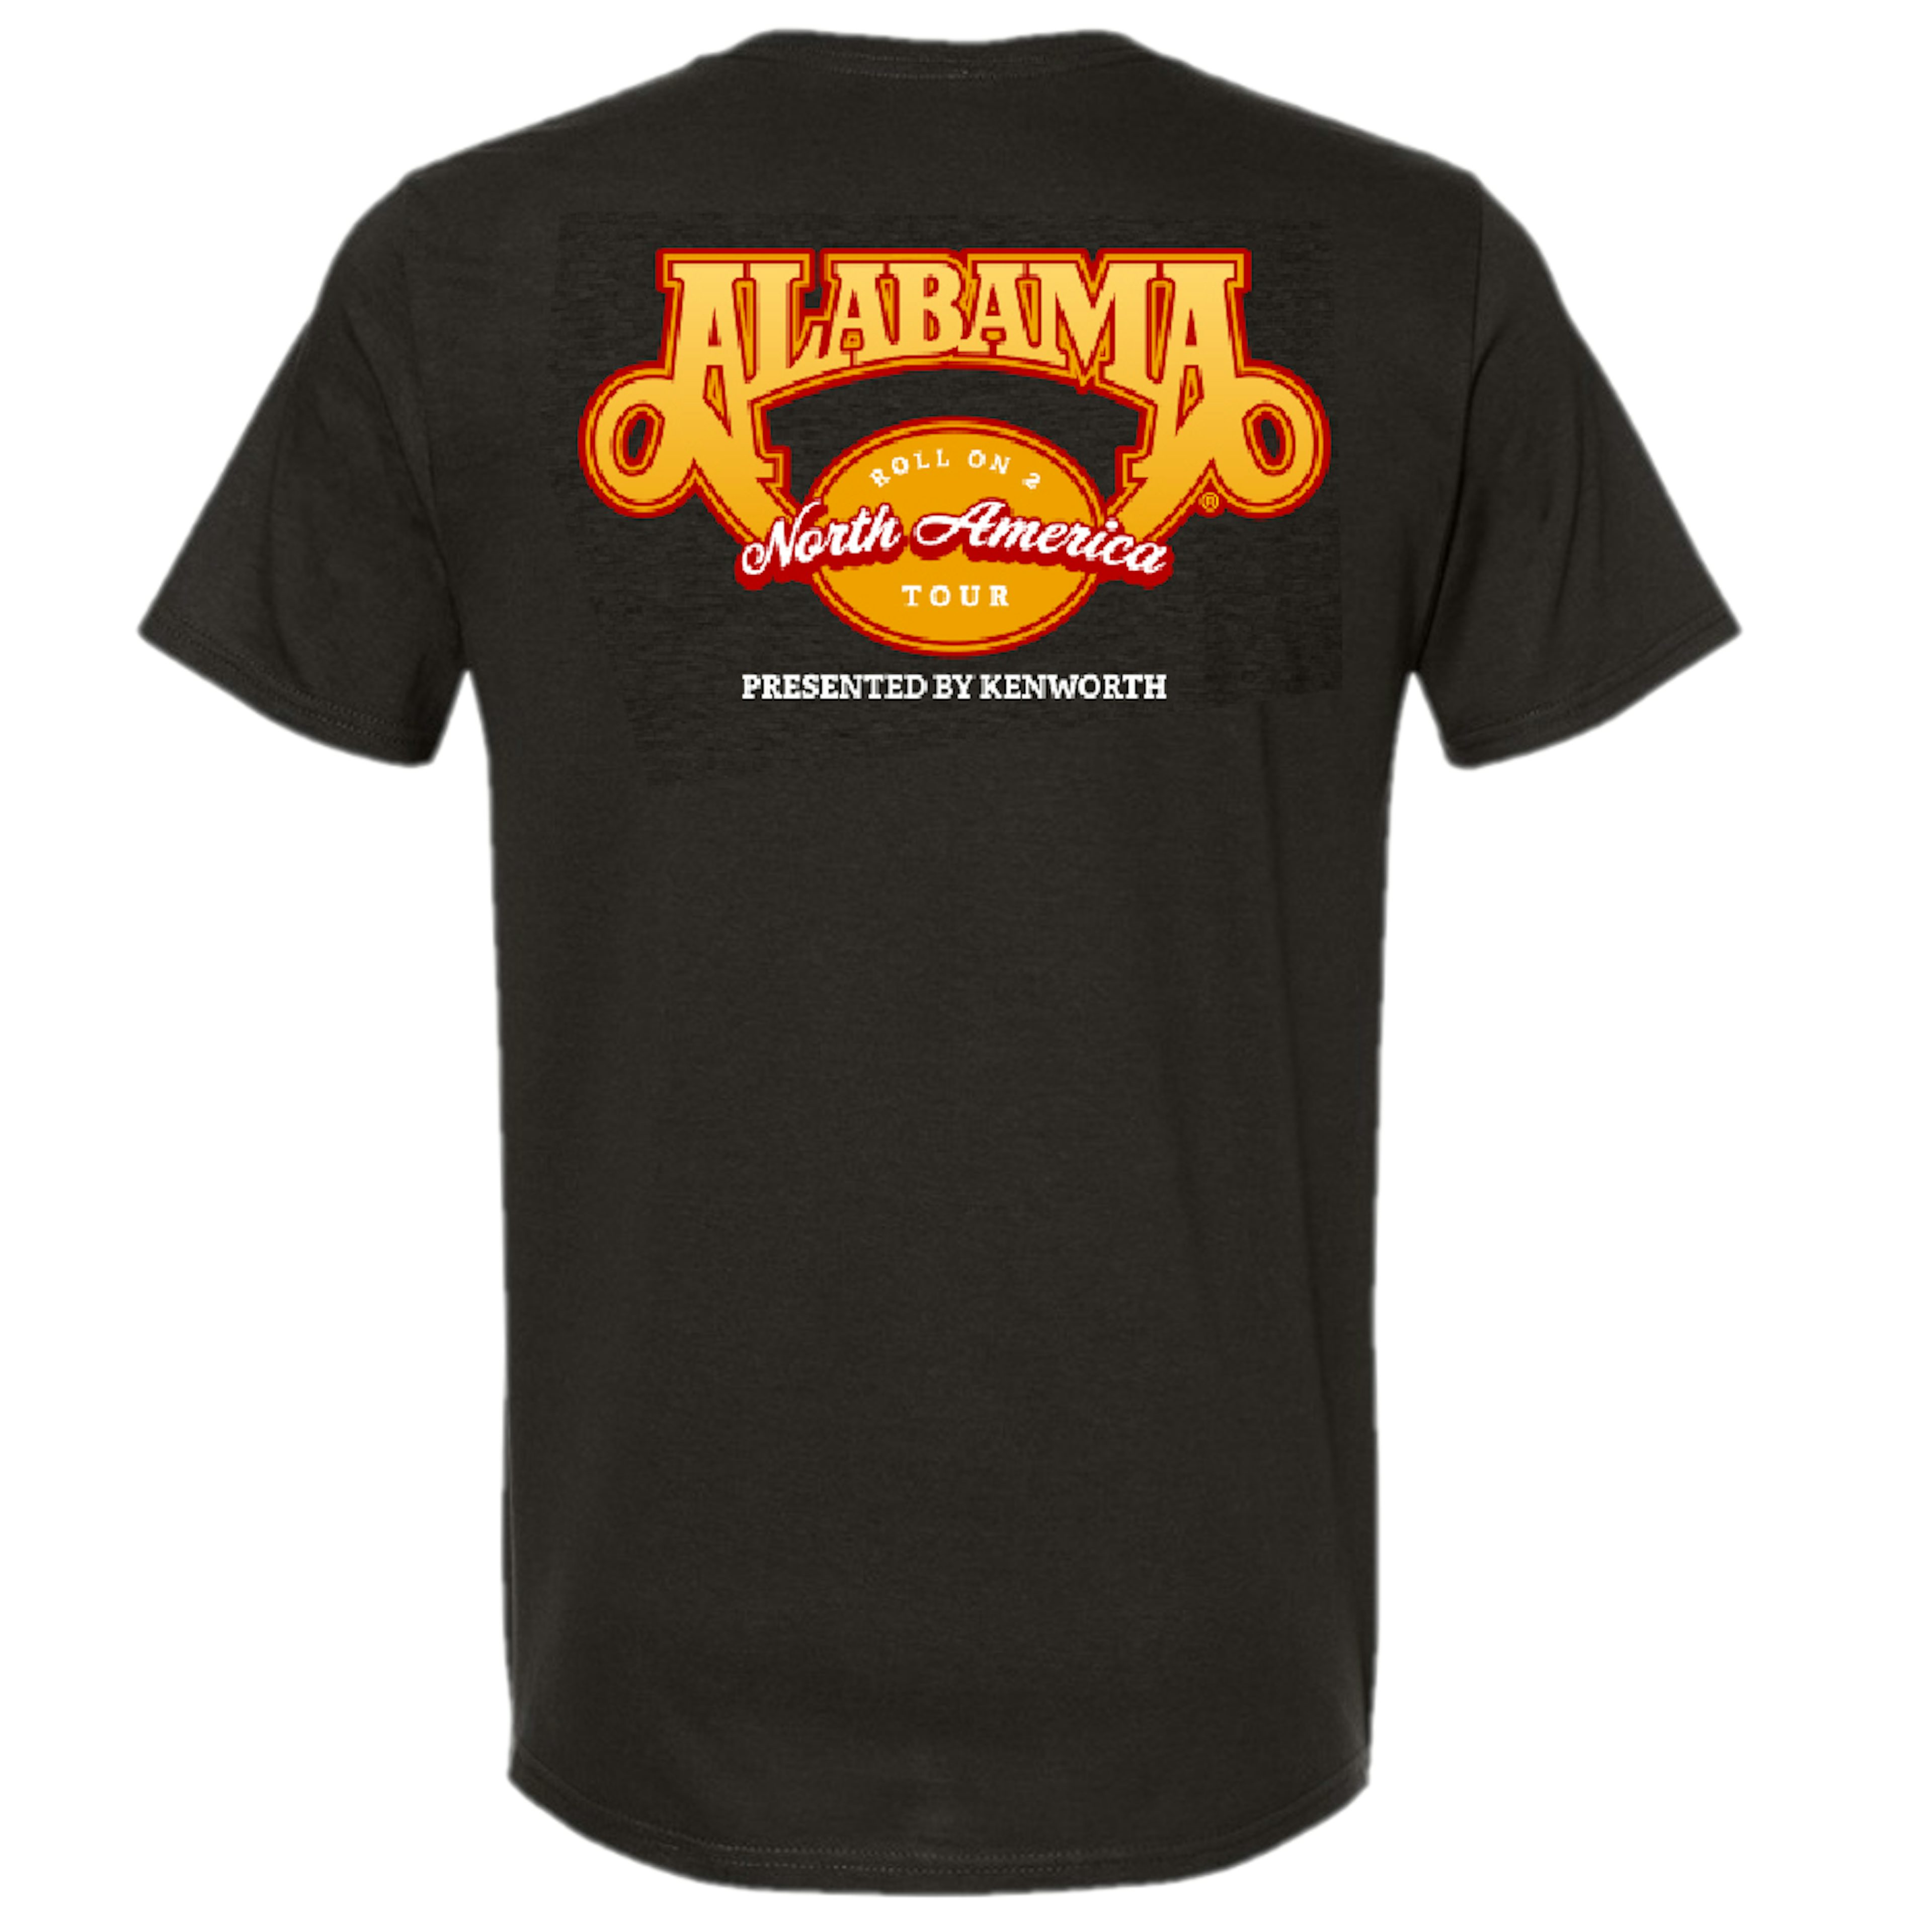 alabama roll on tour t shirt